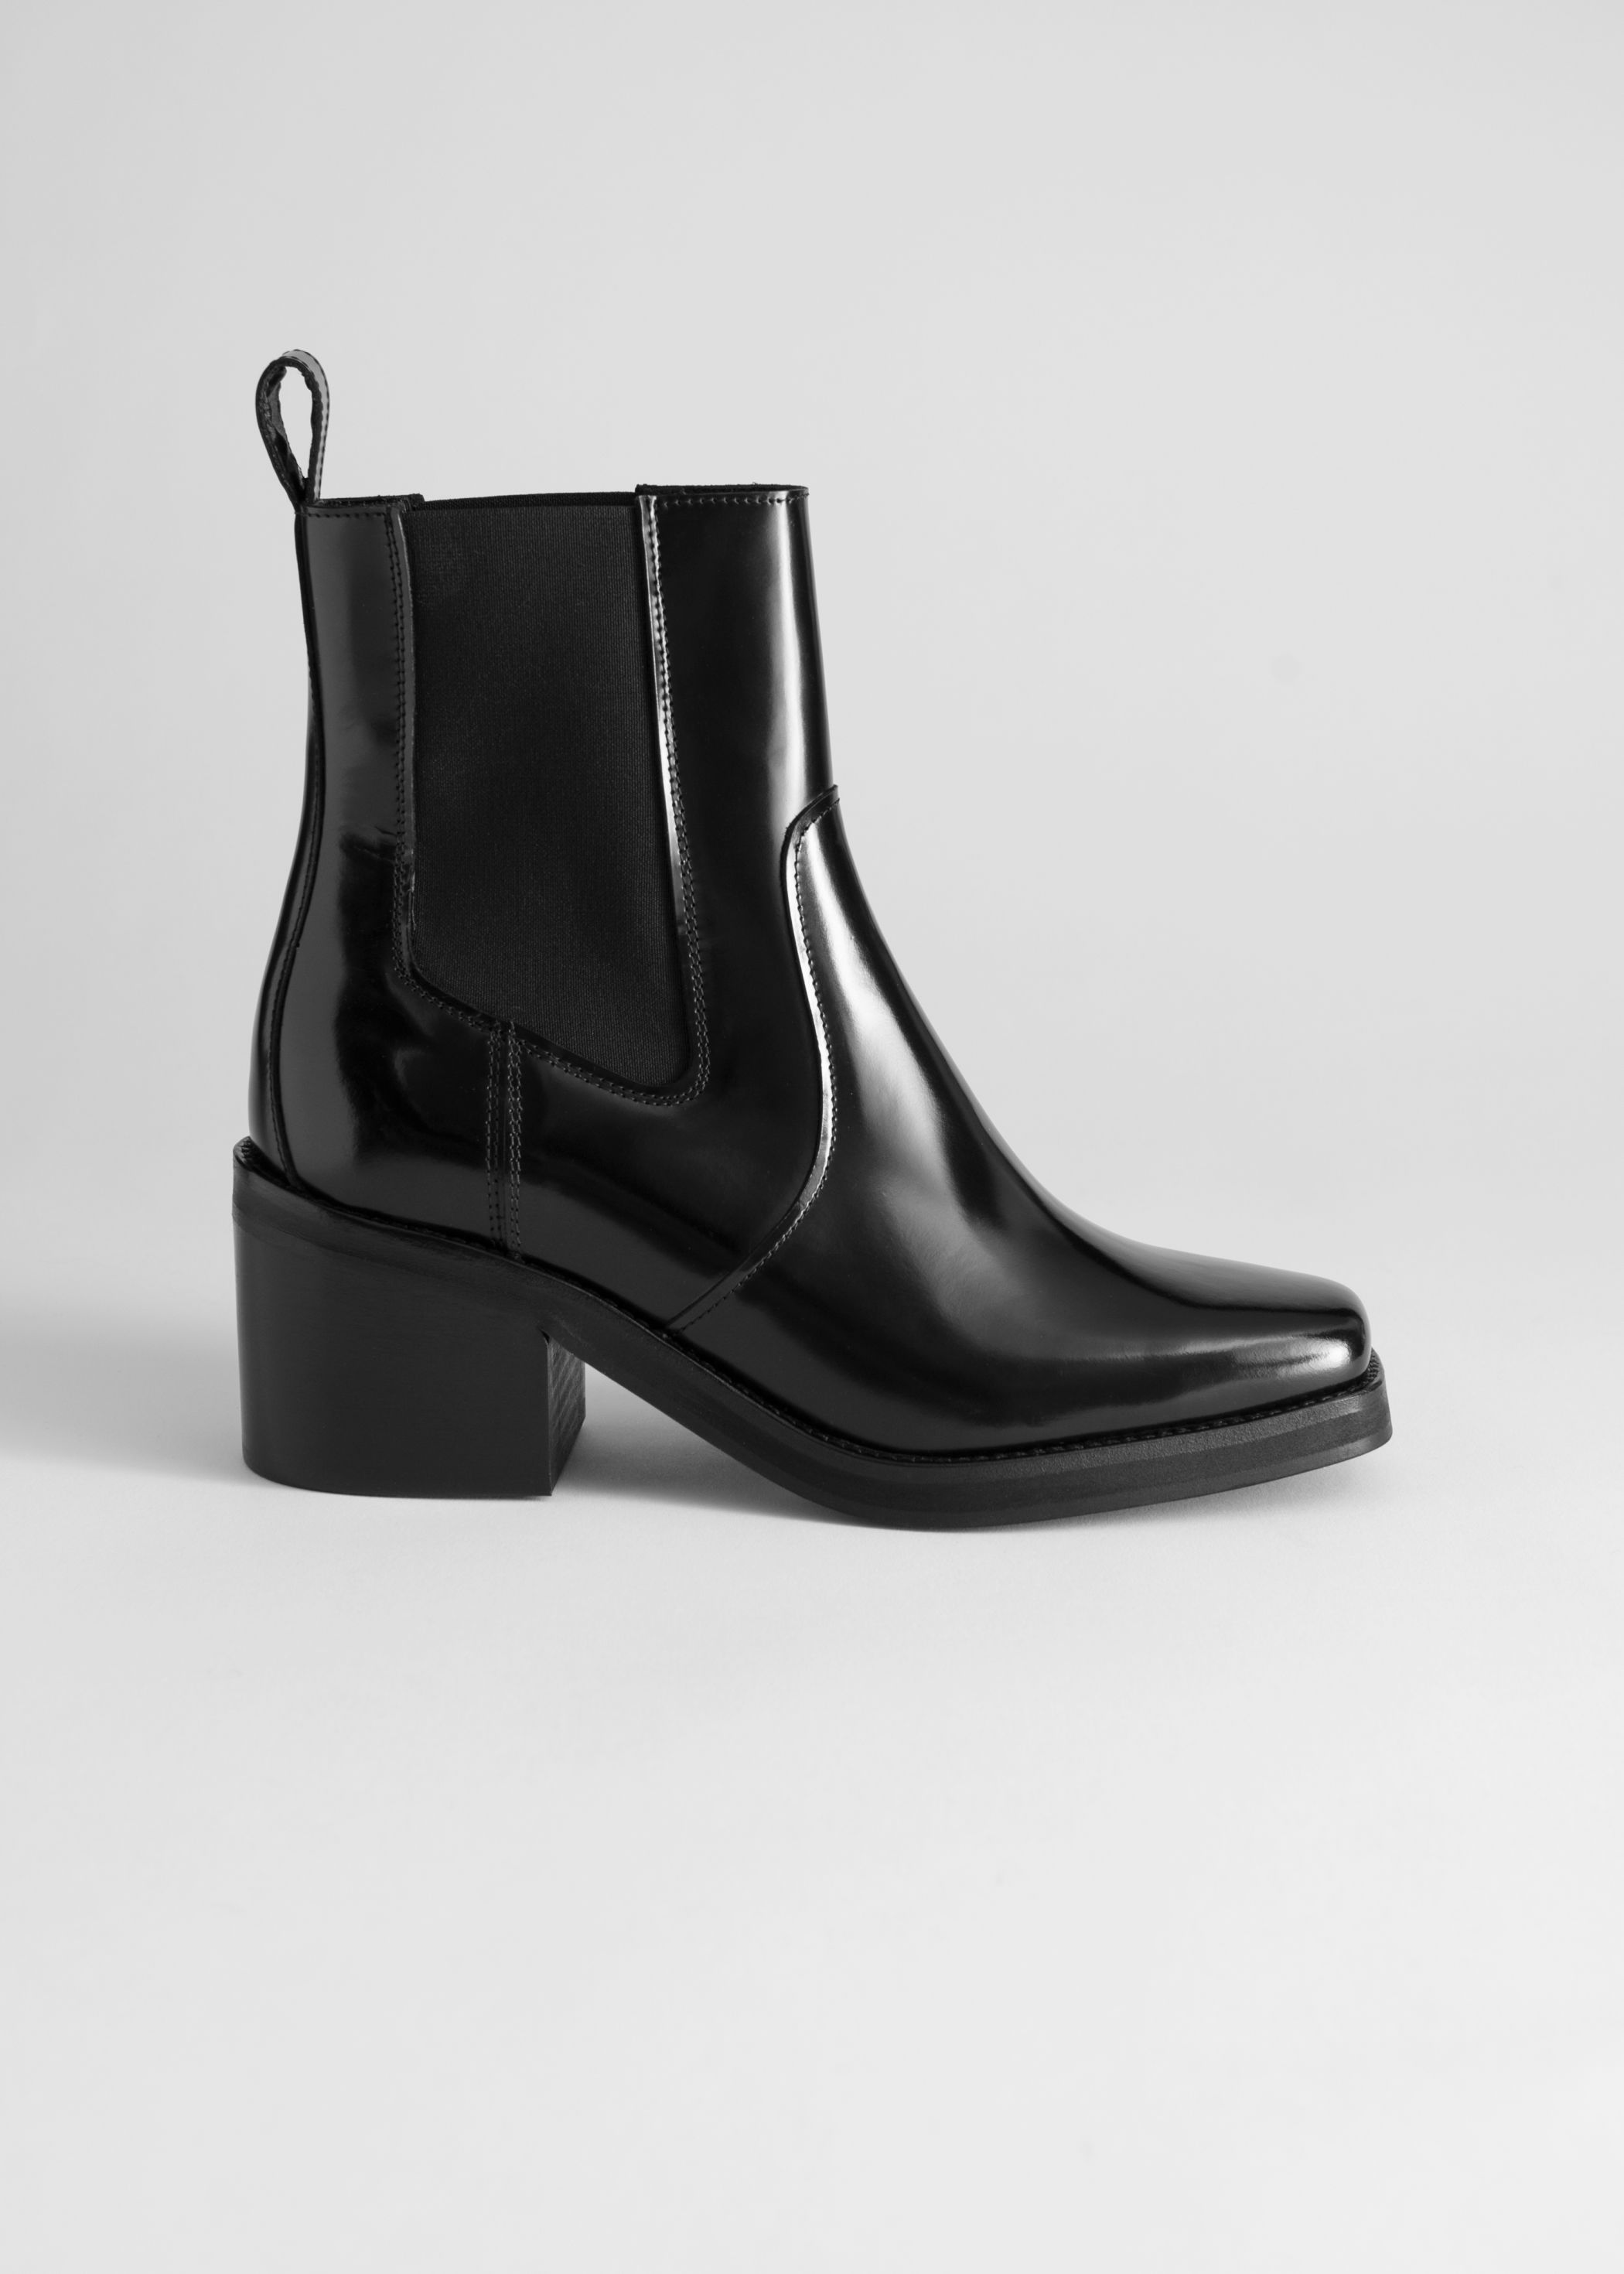 square toe boots womens uk